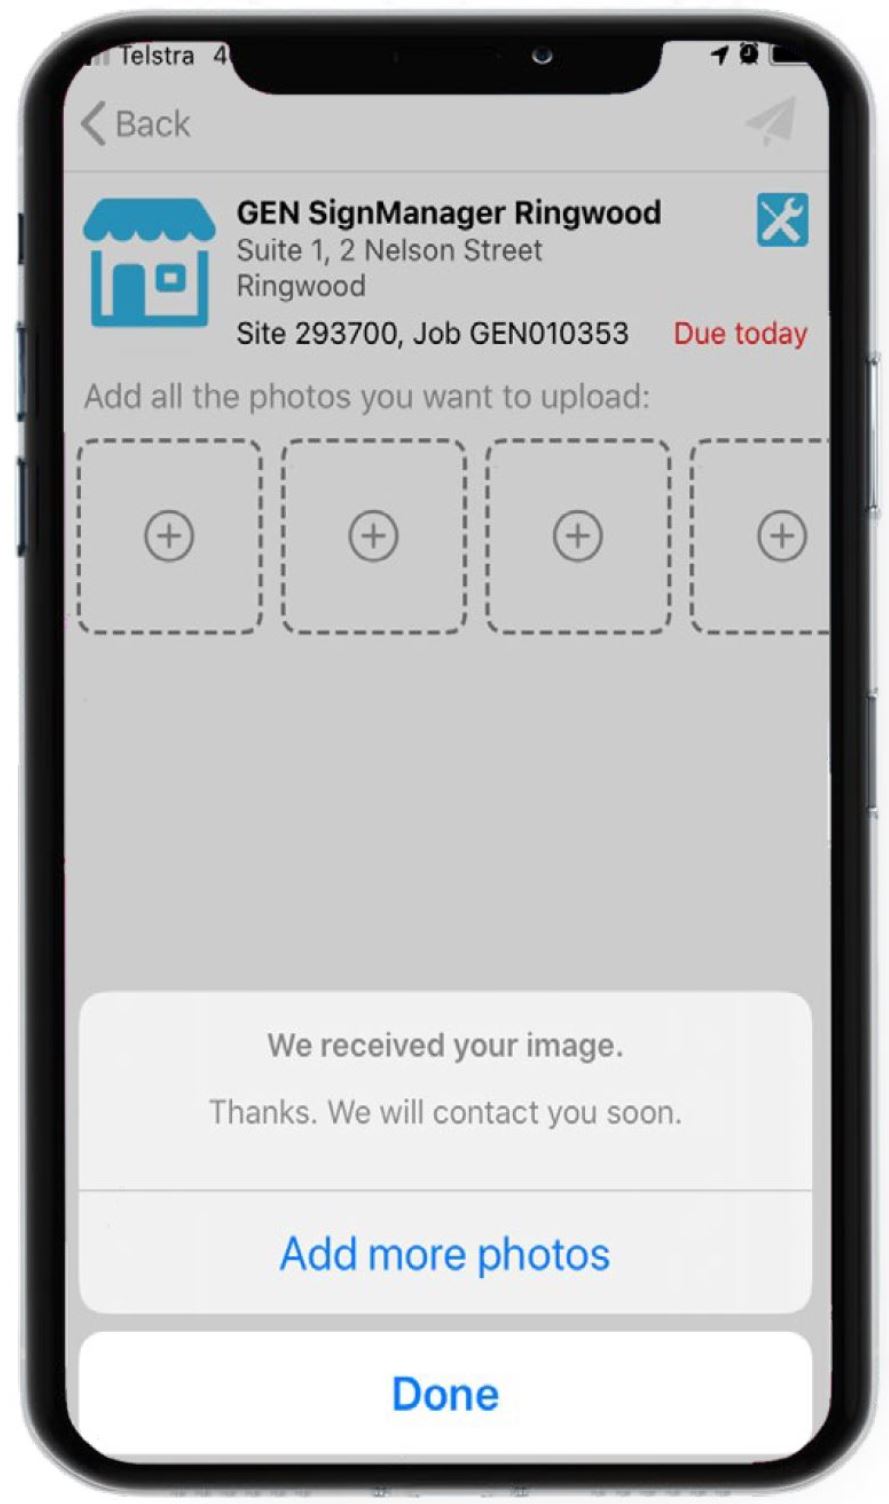 SignManager SignSpot App send